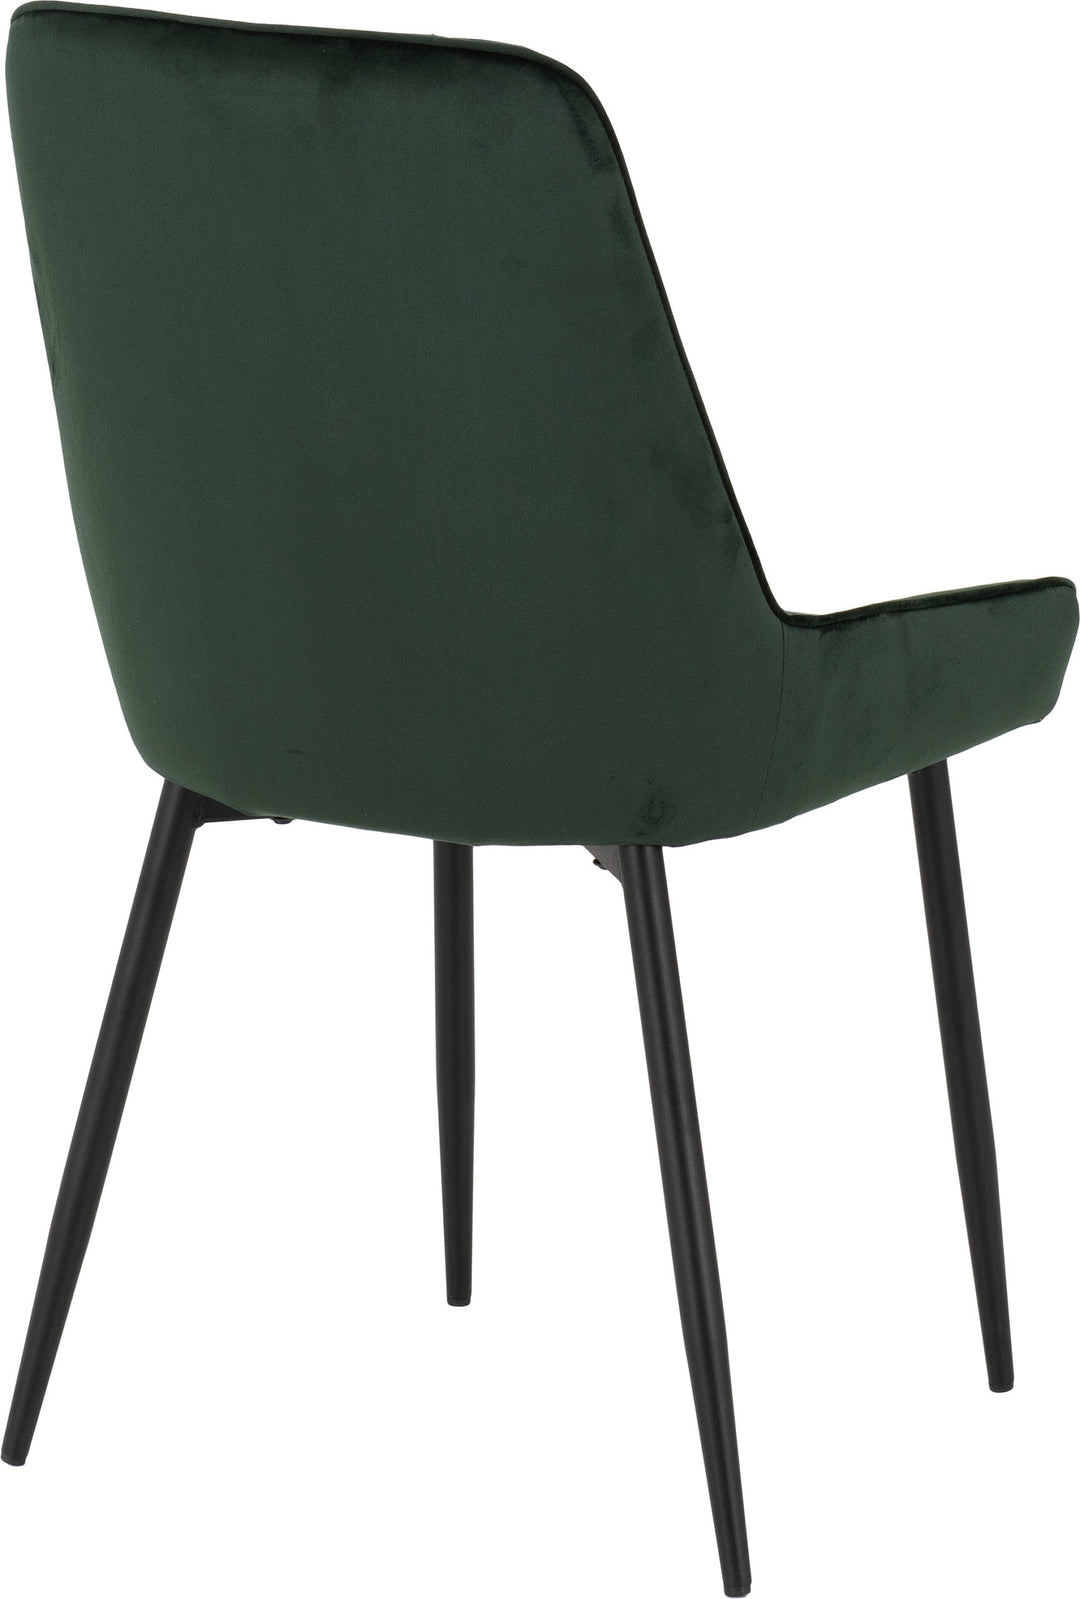 Quebec Straight & Avery Dining Set (X4 Chairs) - Medium Oak Effect/Emerald Green Velvet